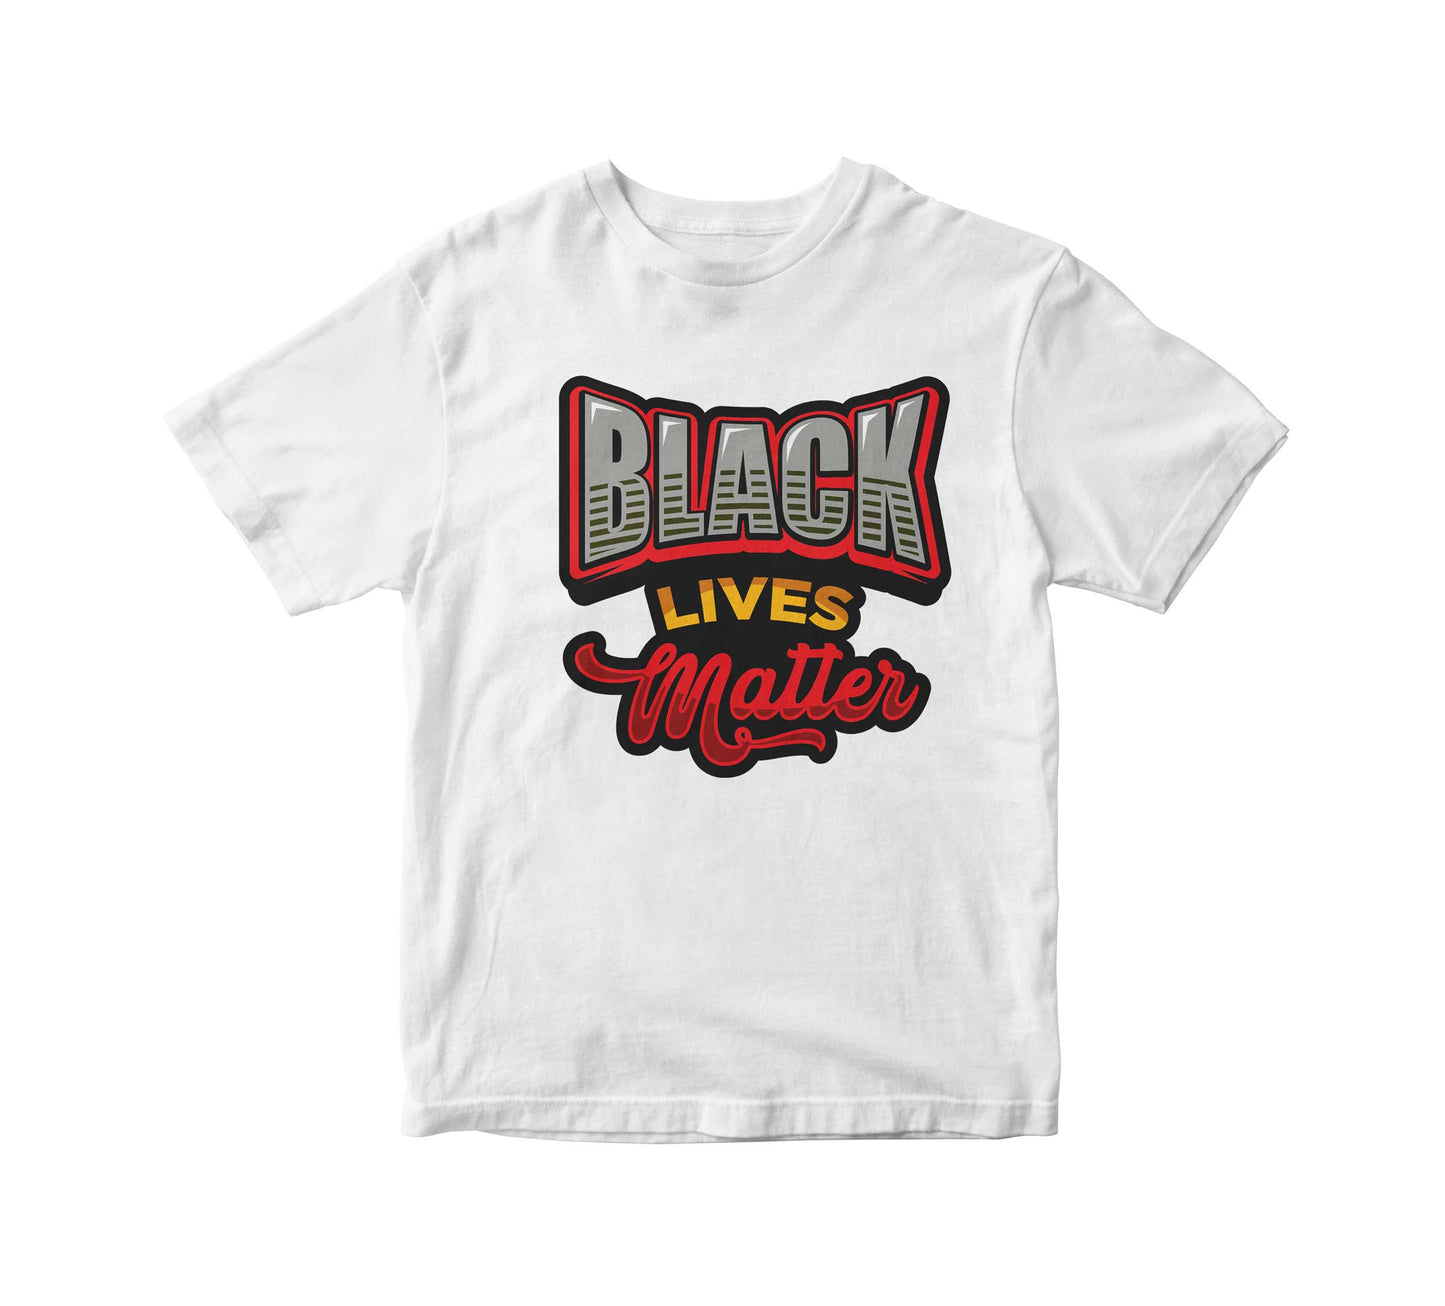 Black Live Matter Graphic Adult Unisex T-Shirt